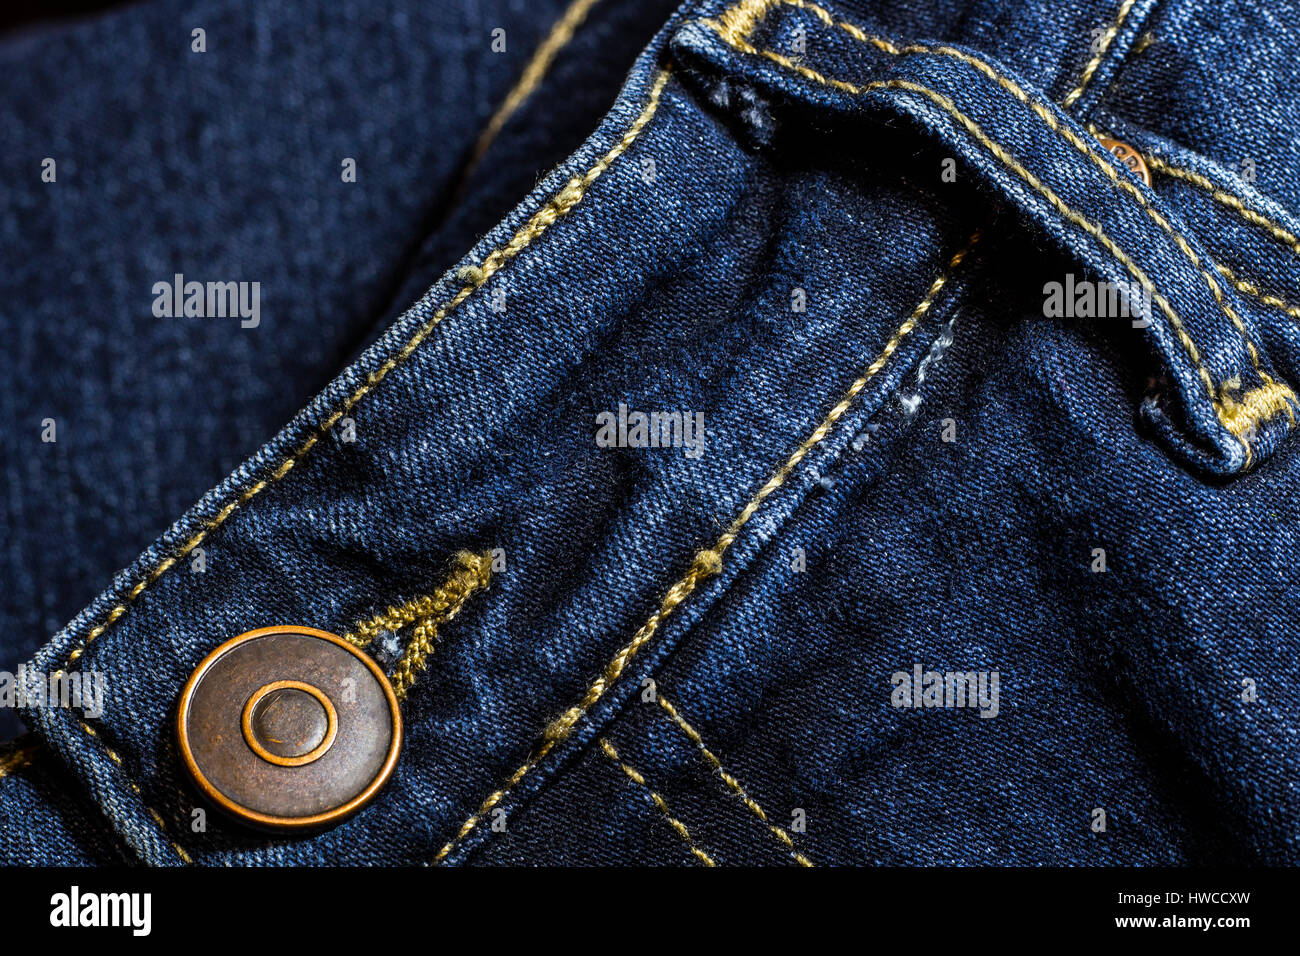 wrangler jeans stock